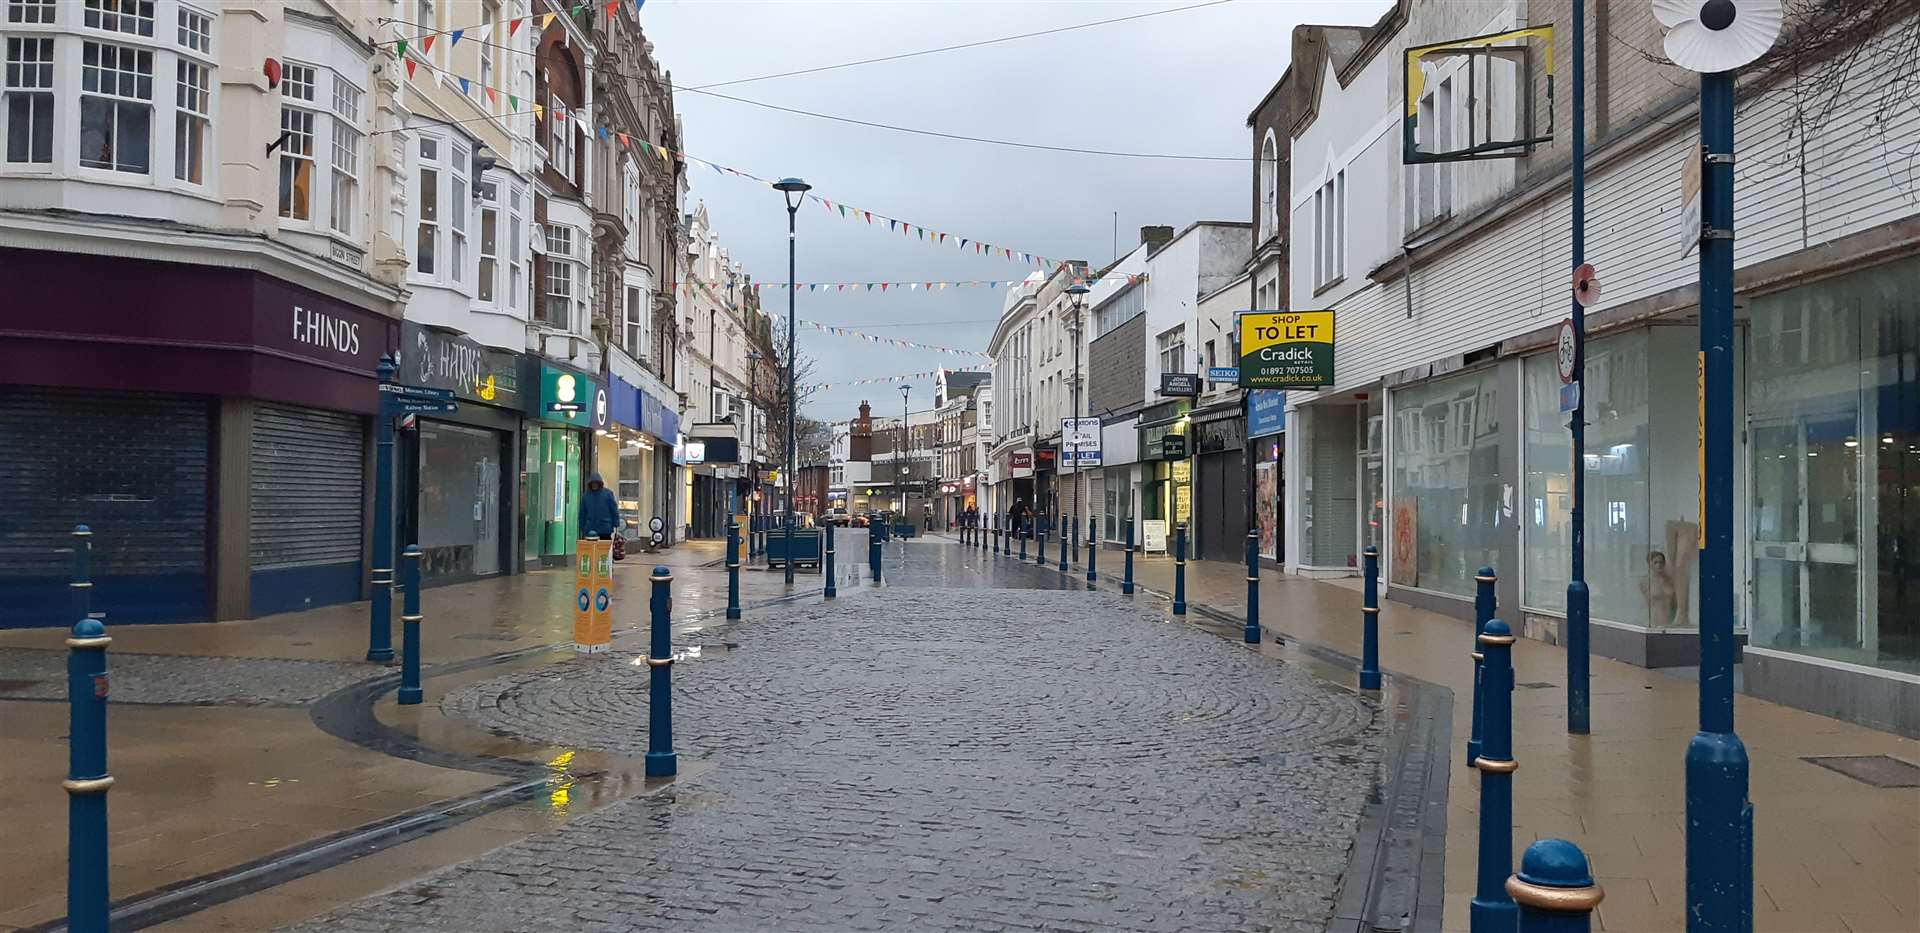 Biggin Street in Dover town centre, on the day the present lockdown began, January 5